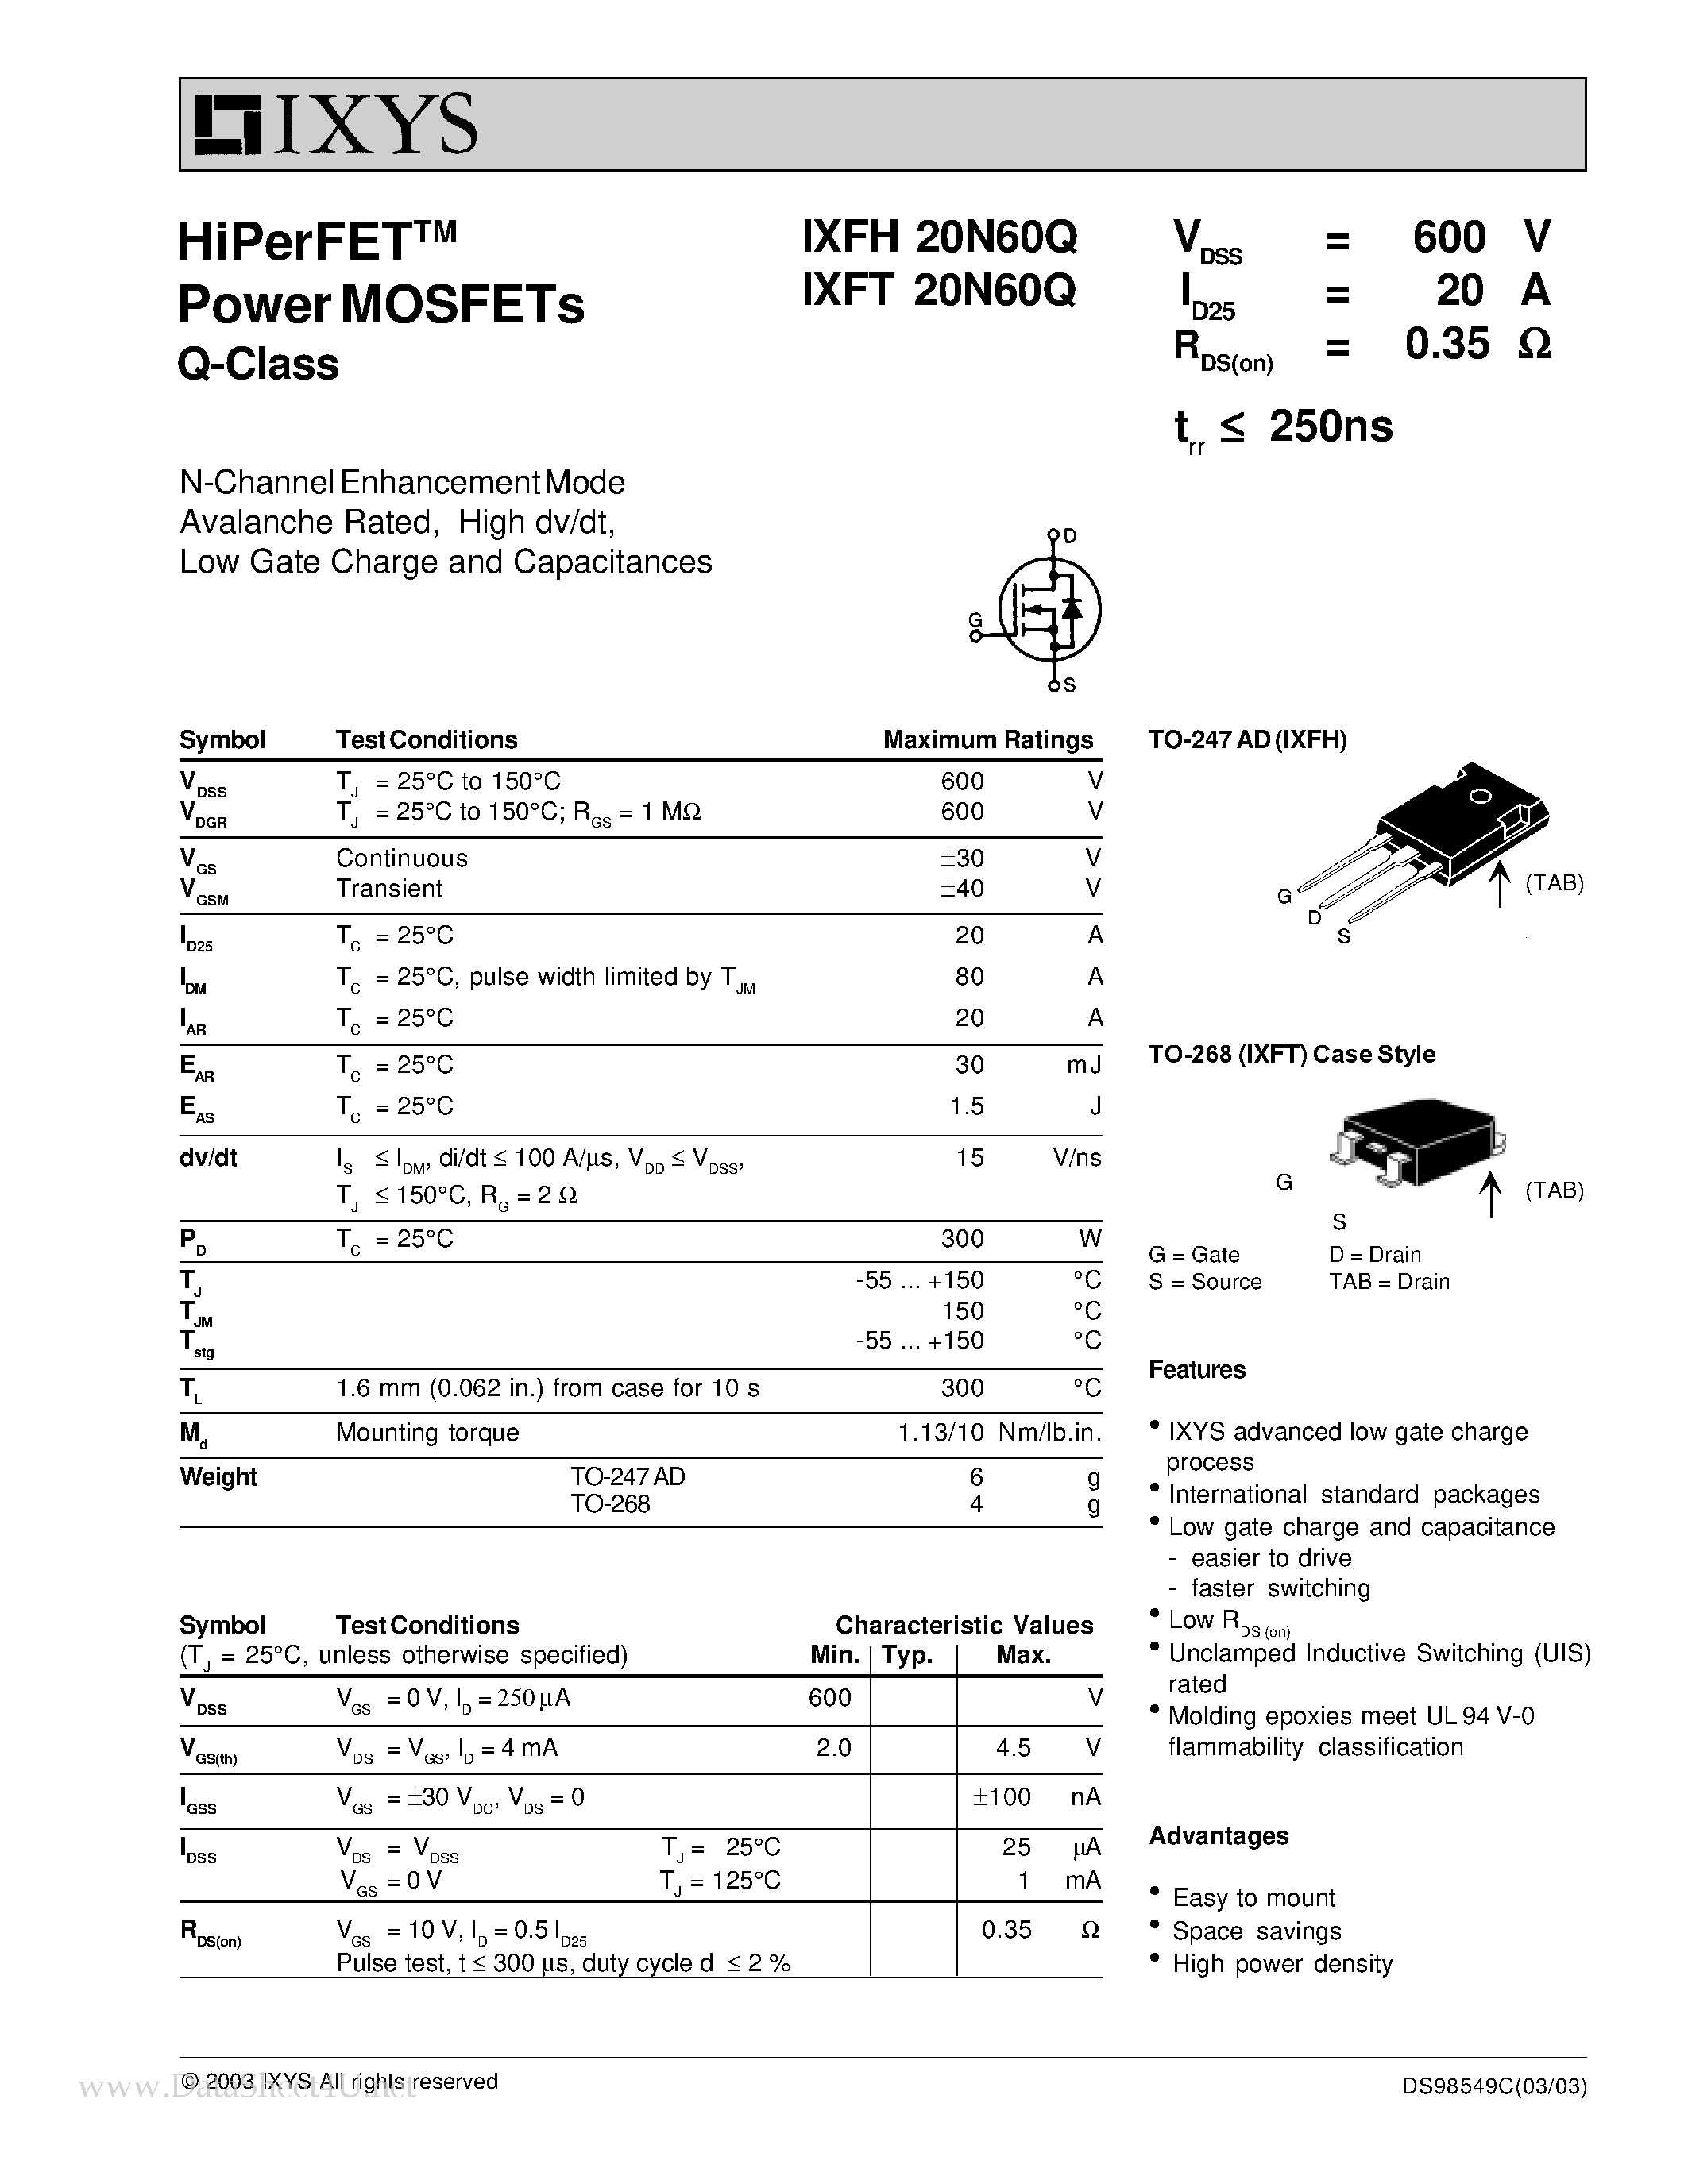 Даташит IXFH20N60Q - HiPerFET Power MOSFETs Q-Class страница 1